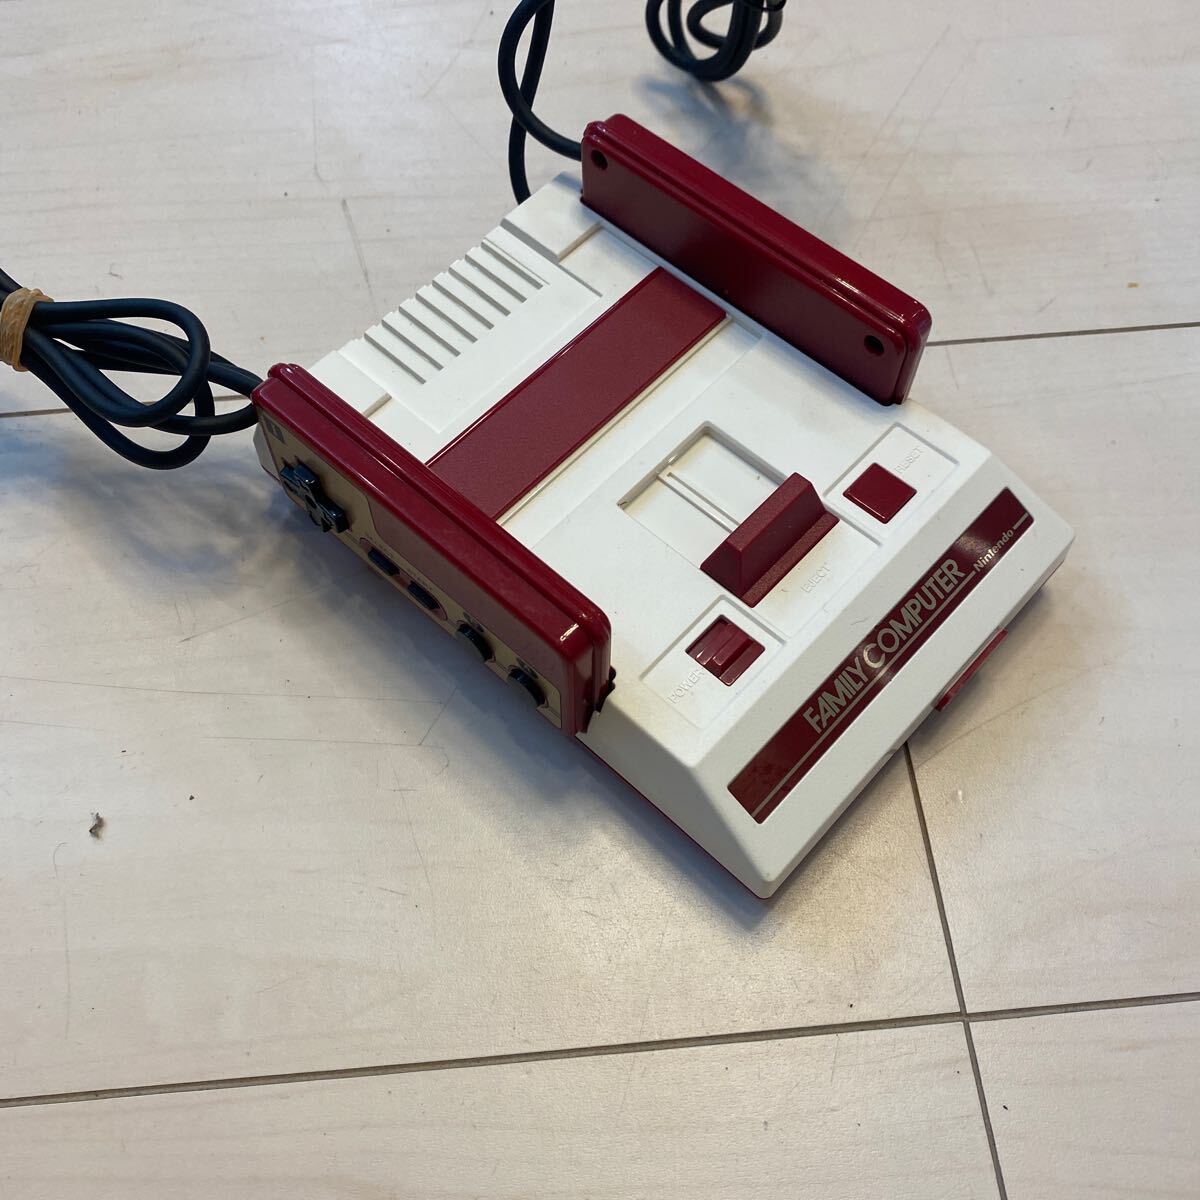 Nintendo*CLV-101* Family computer * Mini Famicom * Nintendo Classic Mini * present condition goods * Junk 